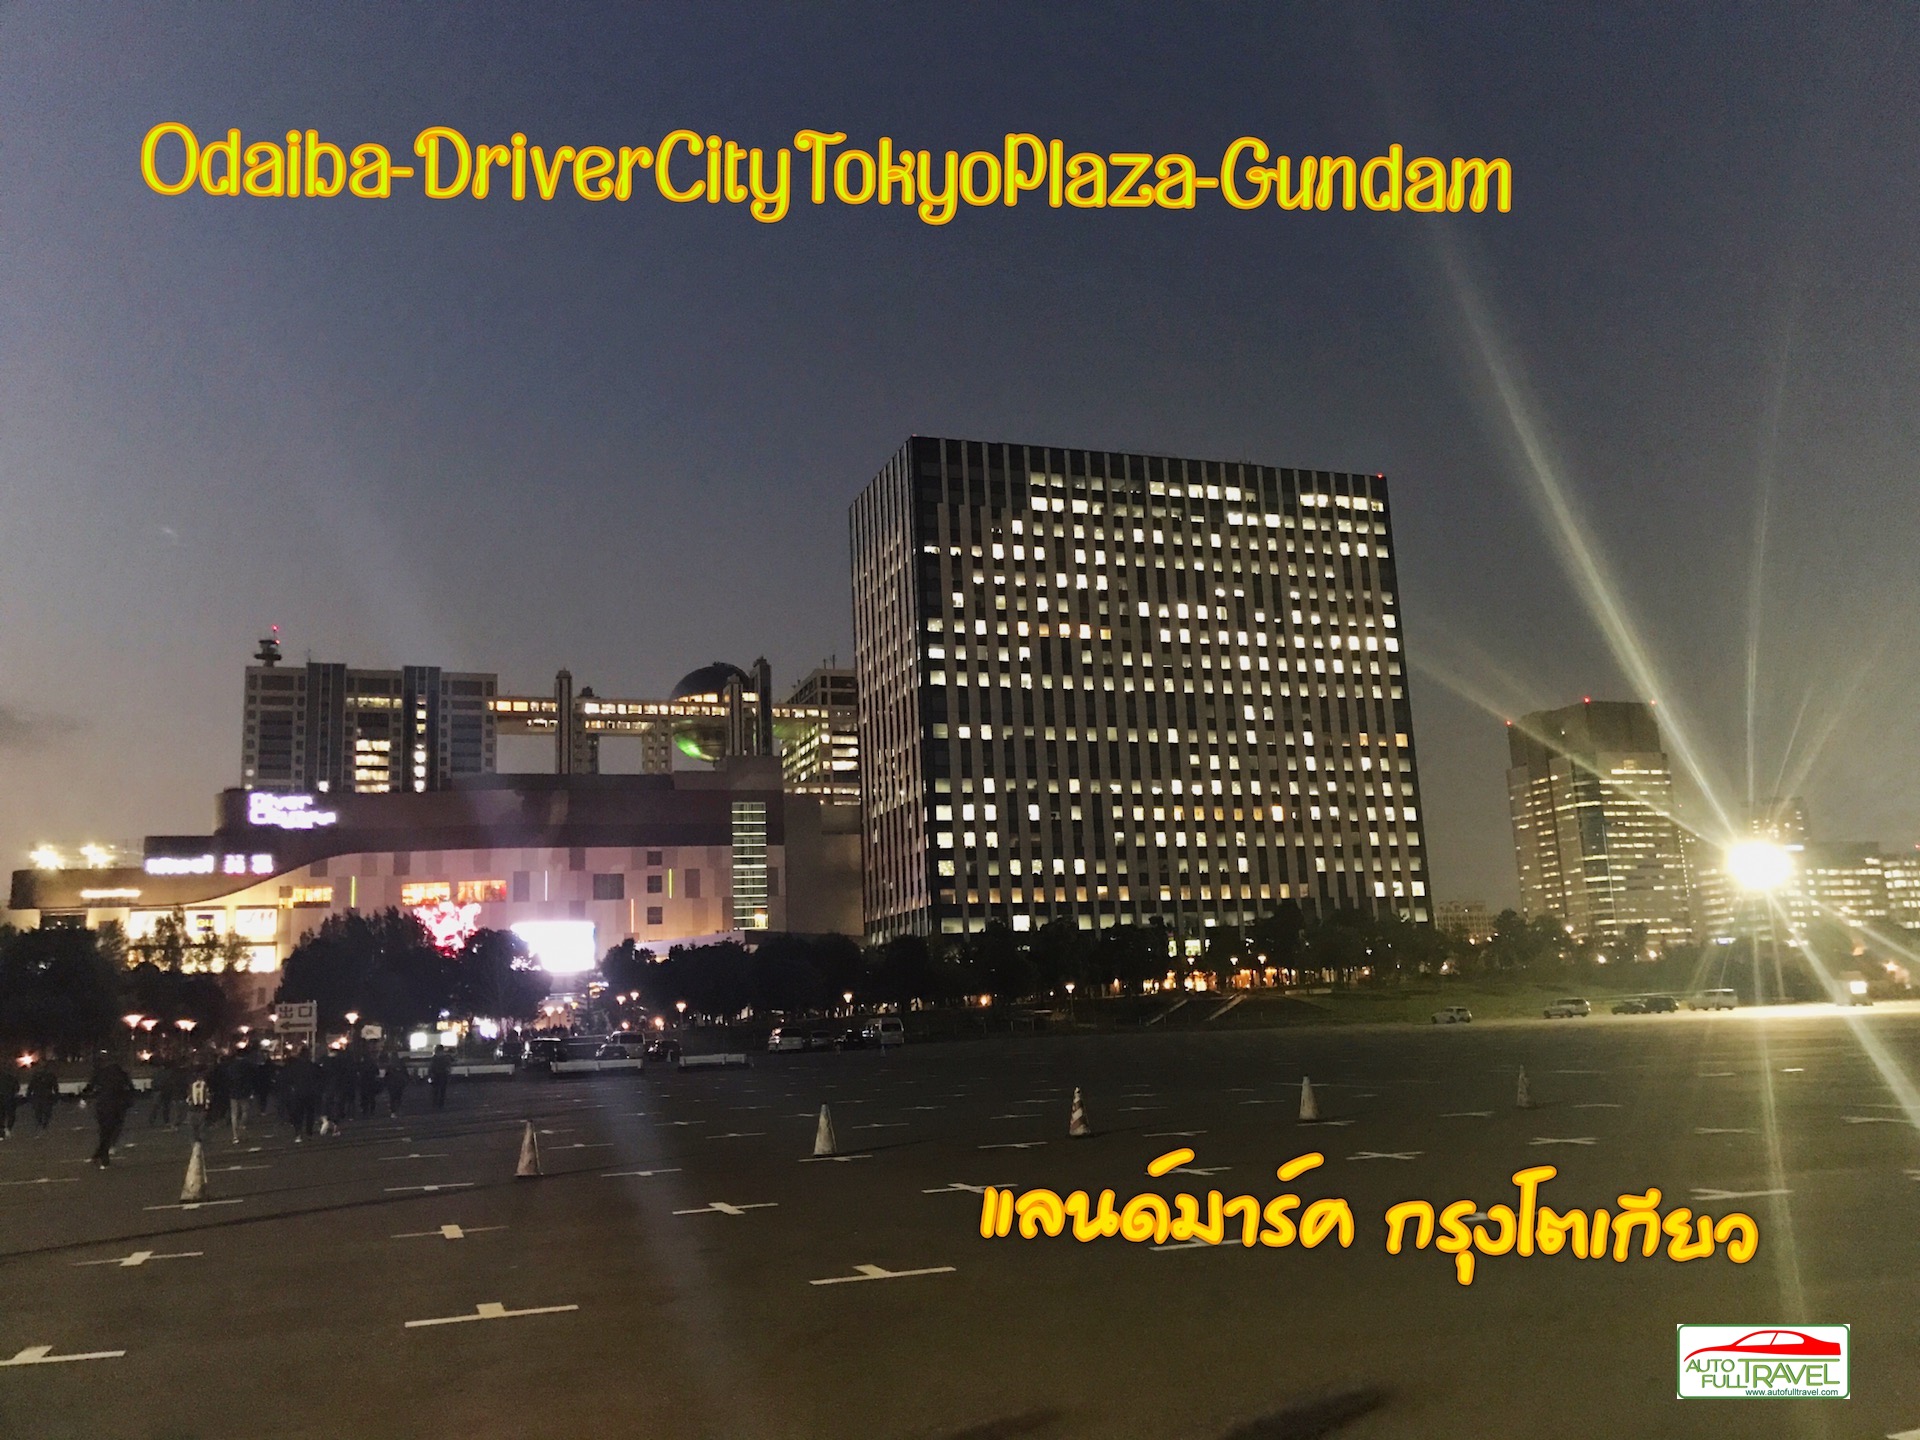 Odaiba-DriverCityTokyoPlaza-GUNDAM แลนด์มาร์คสำคัณกรุงโตเกียว  
